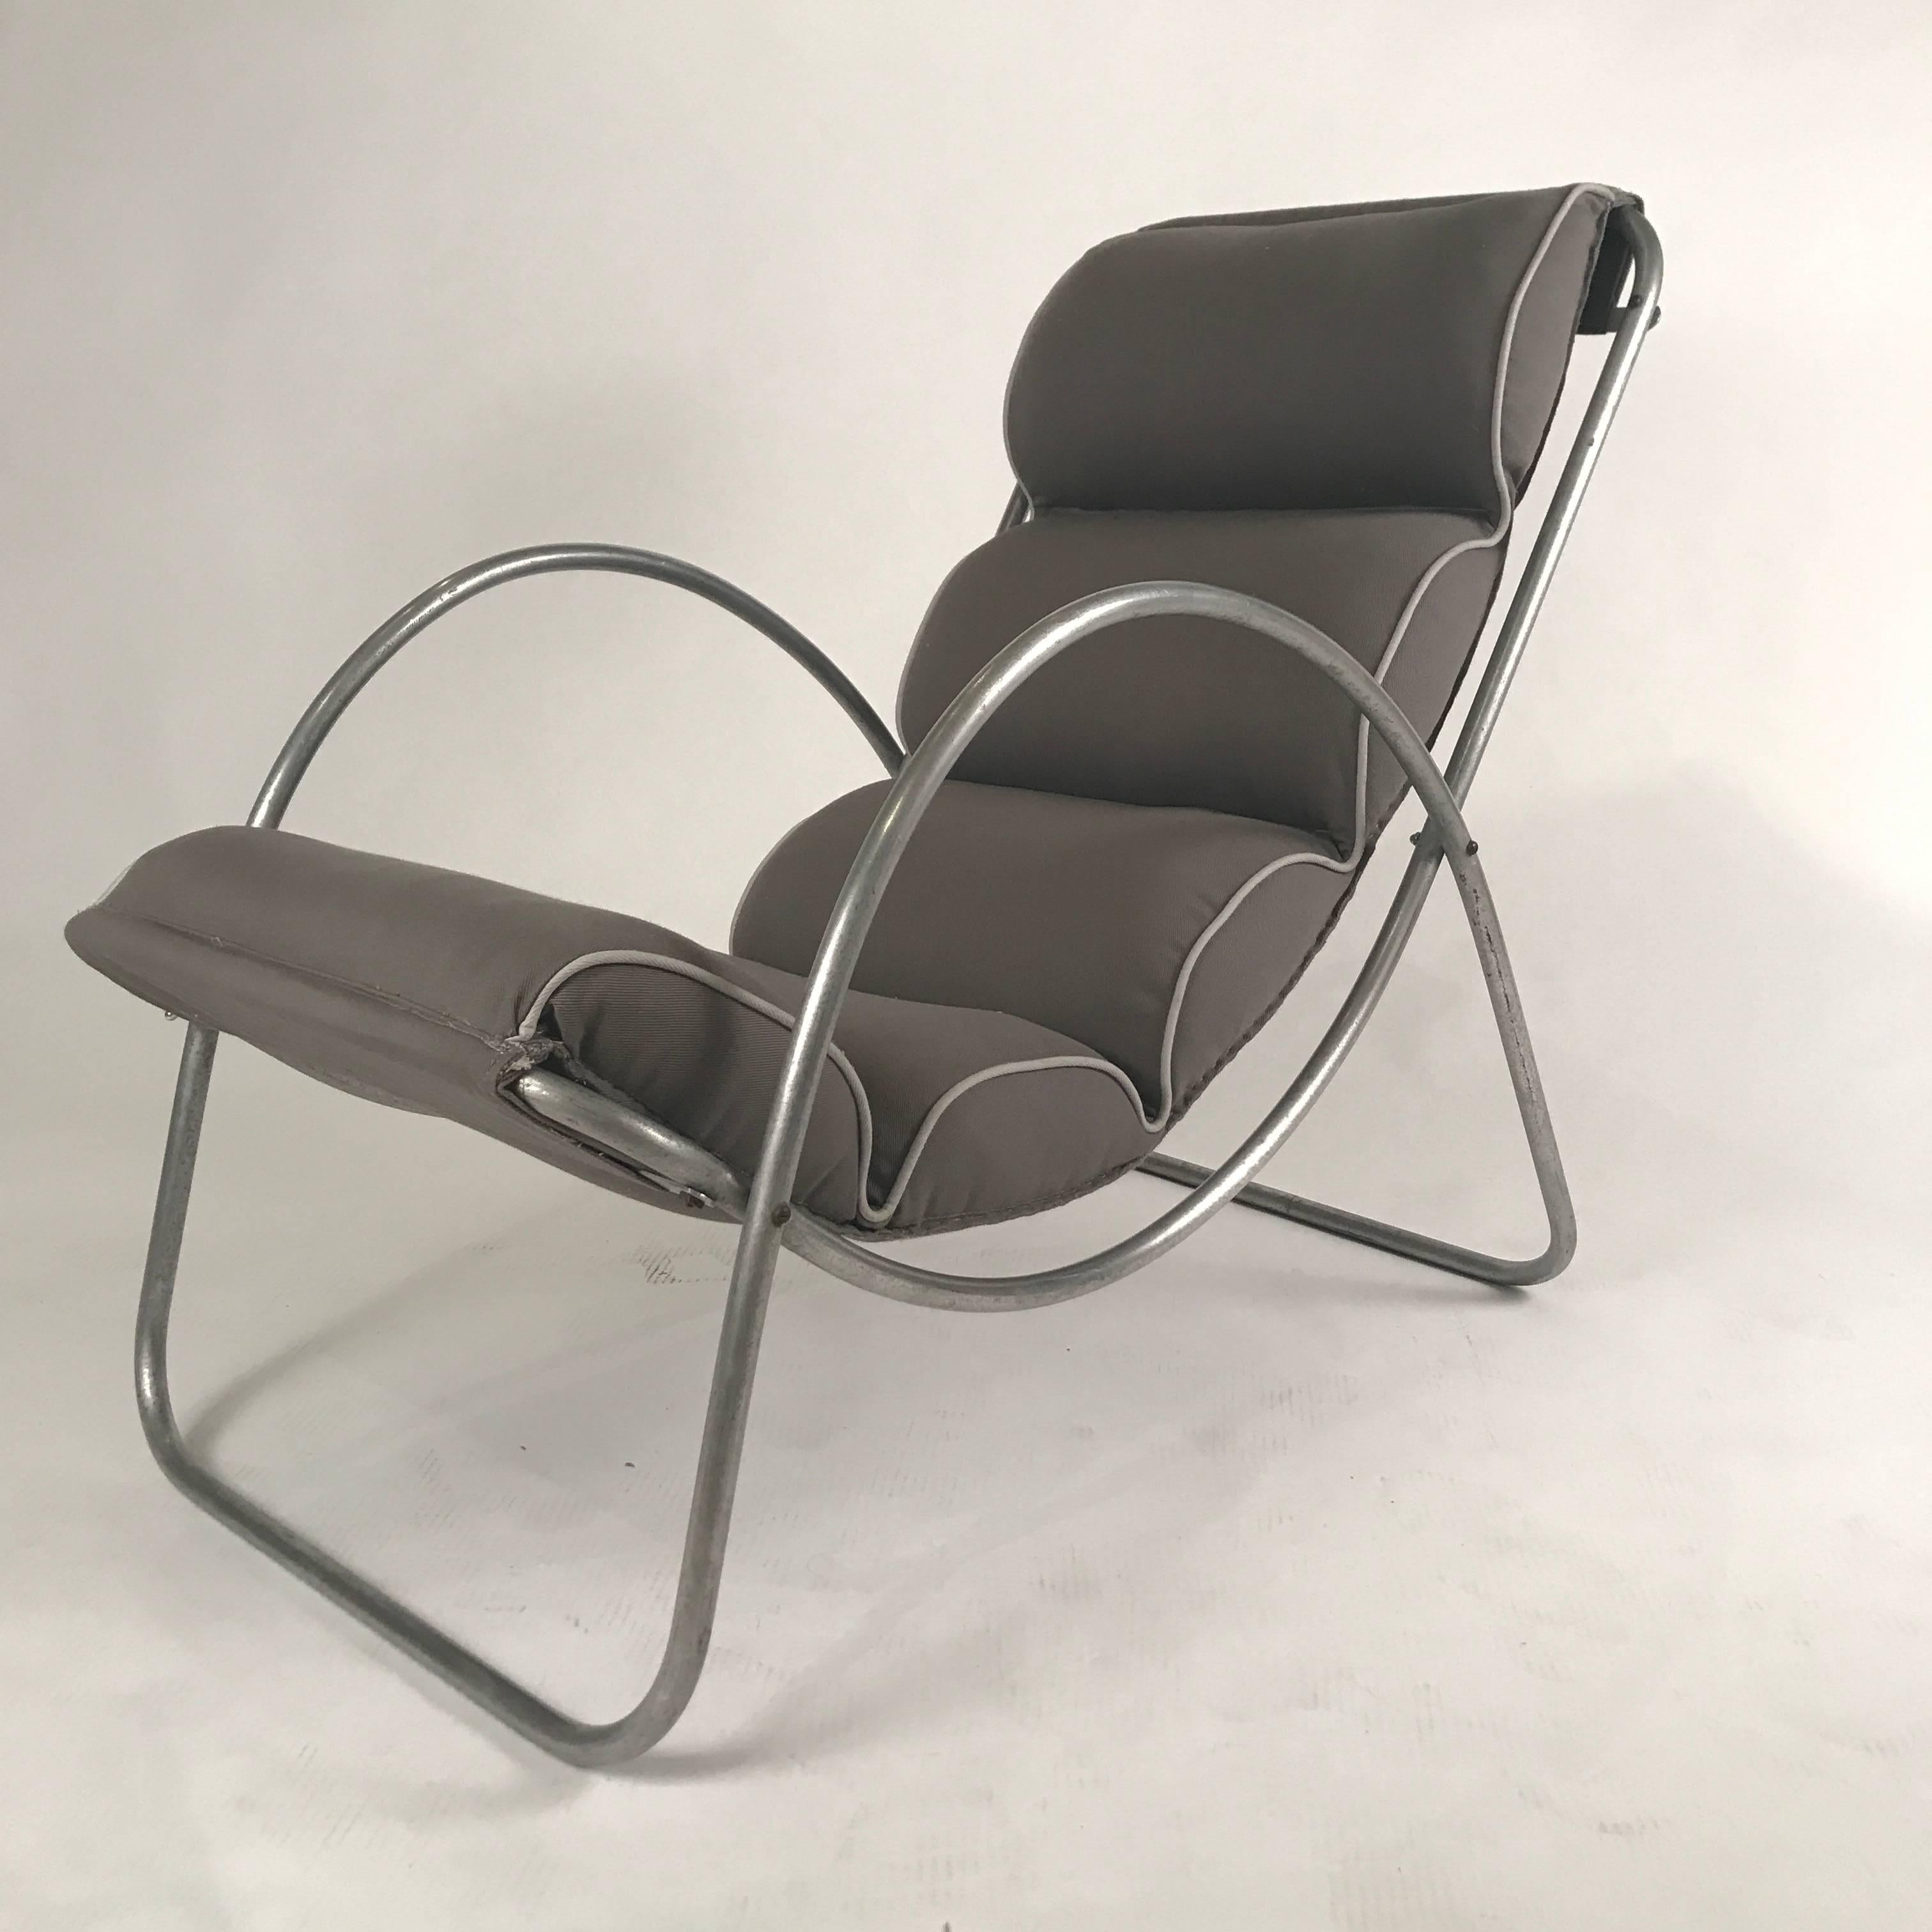 Mid-20th Century Pair of Halliburton Lounge Chairs, 1930s Art Deco Machine Age Modernist Design